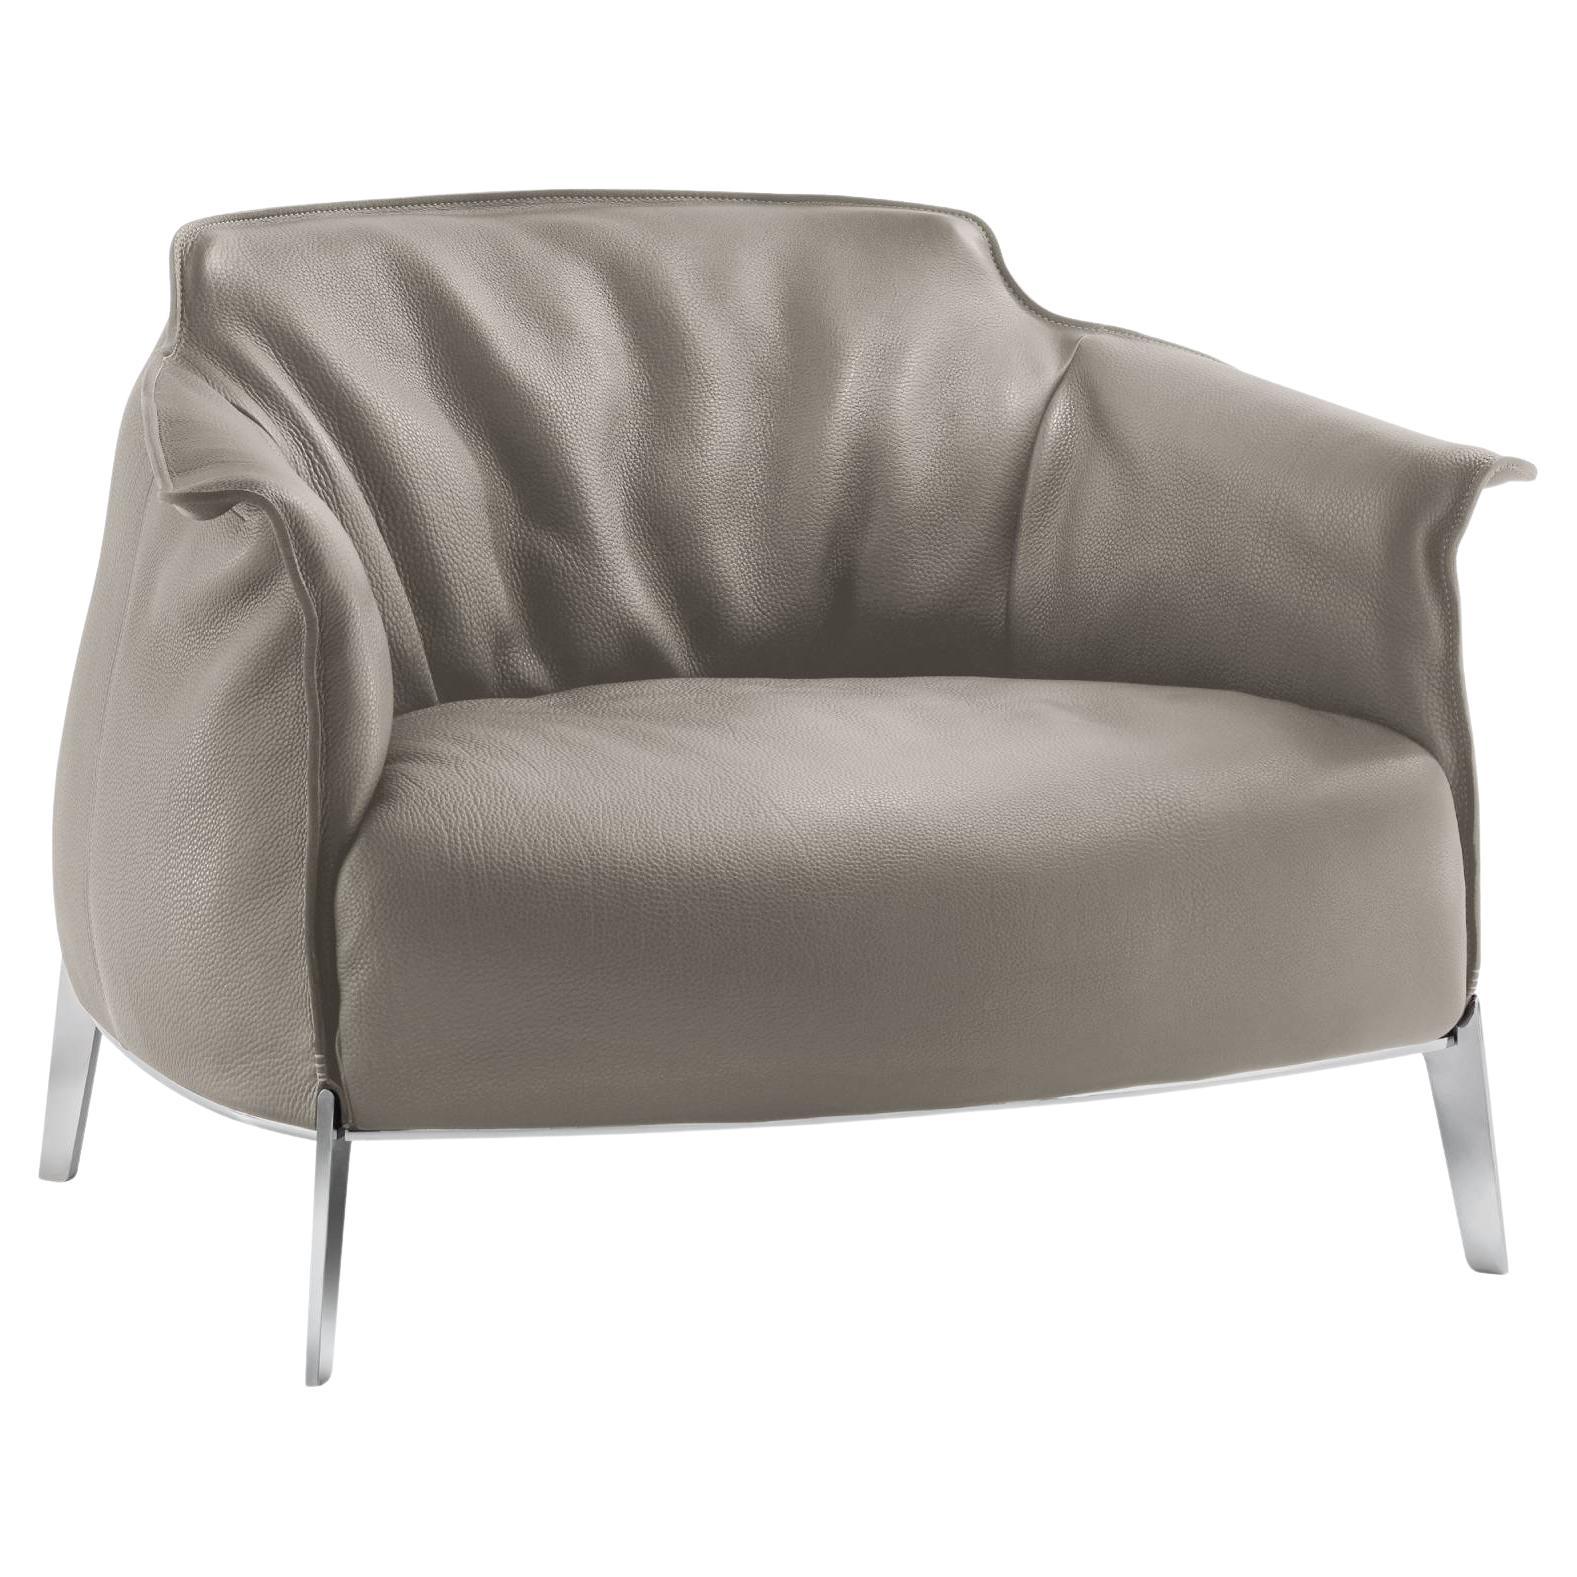 Archibald Gran Comfort fauteuil en cuir véritable Pelle Safari Elefante gris